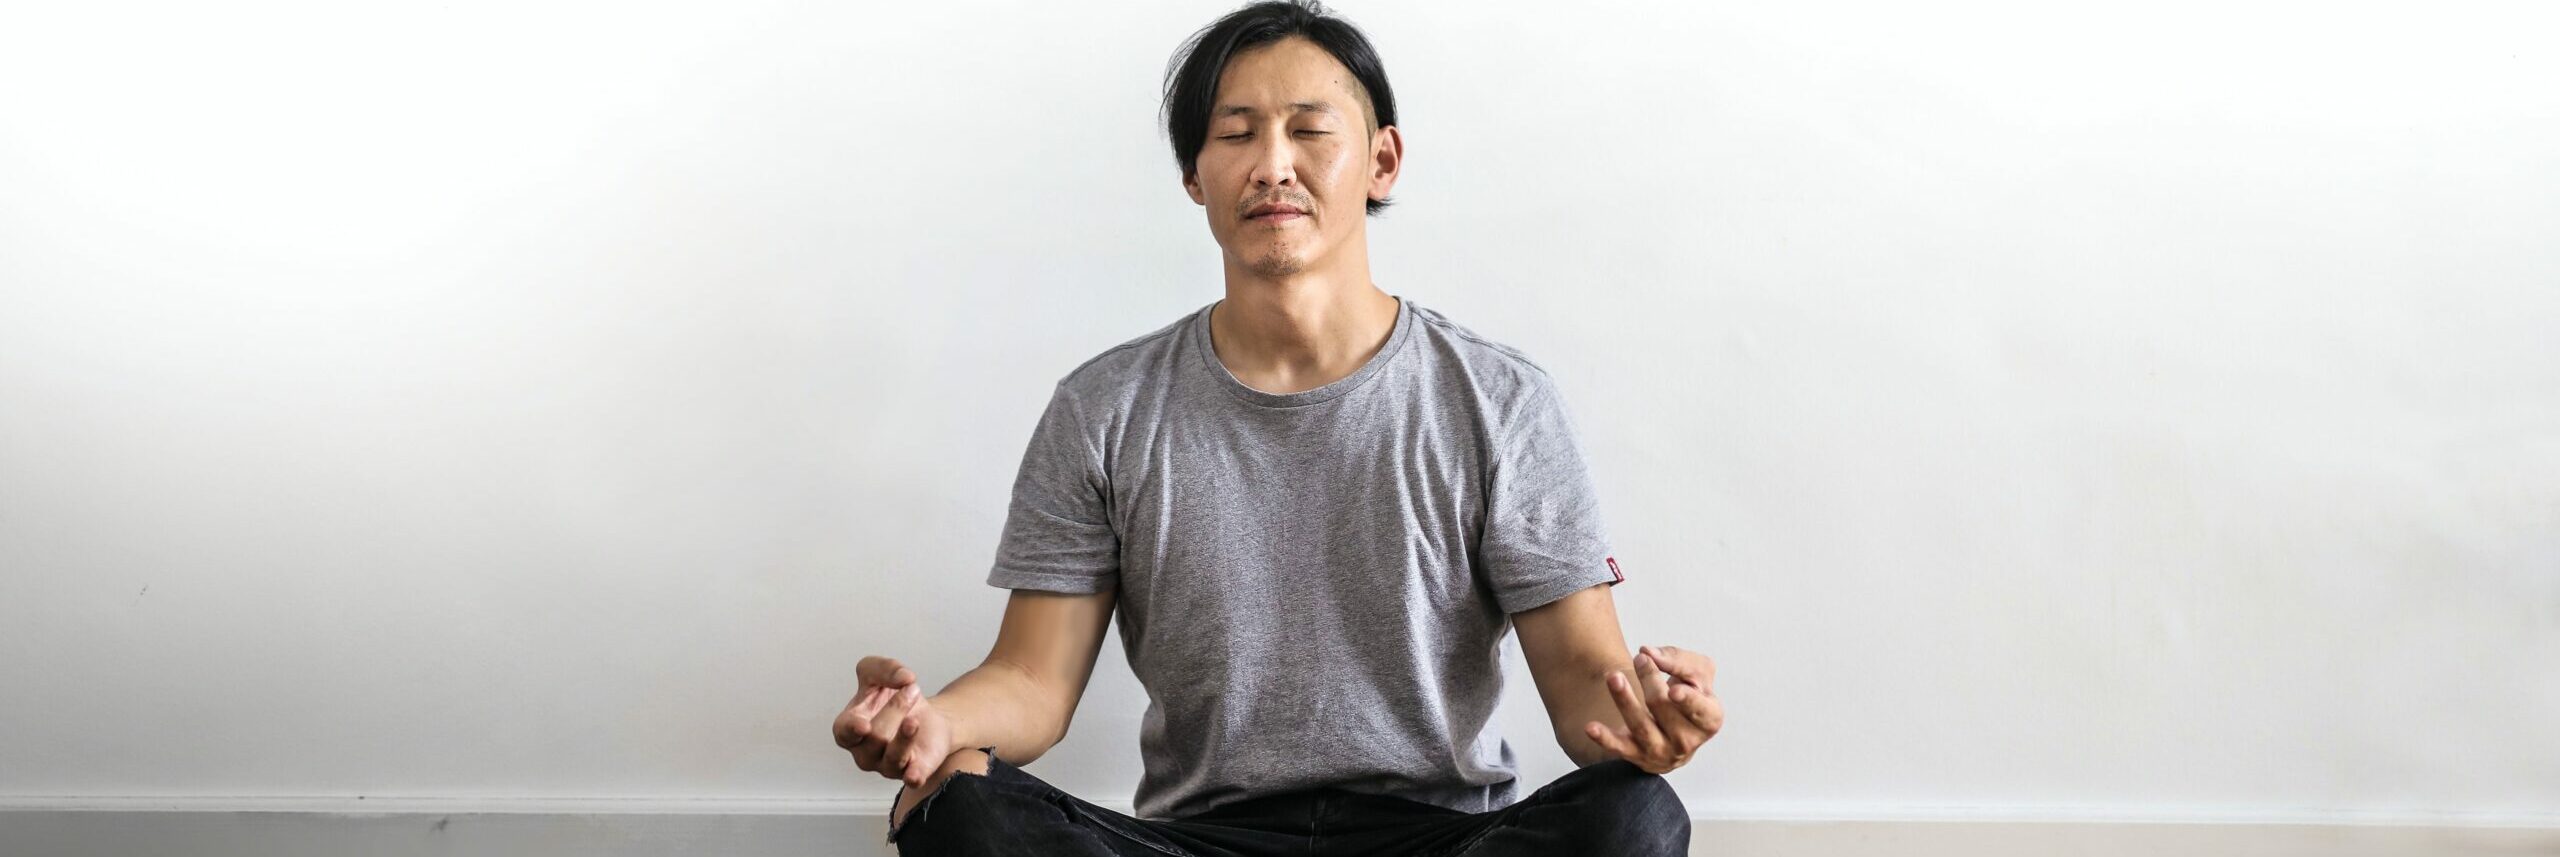 A man meditating